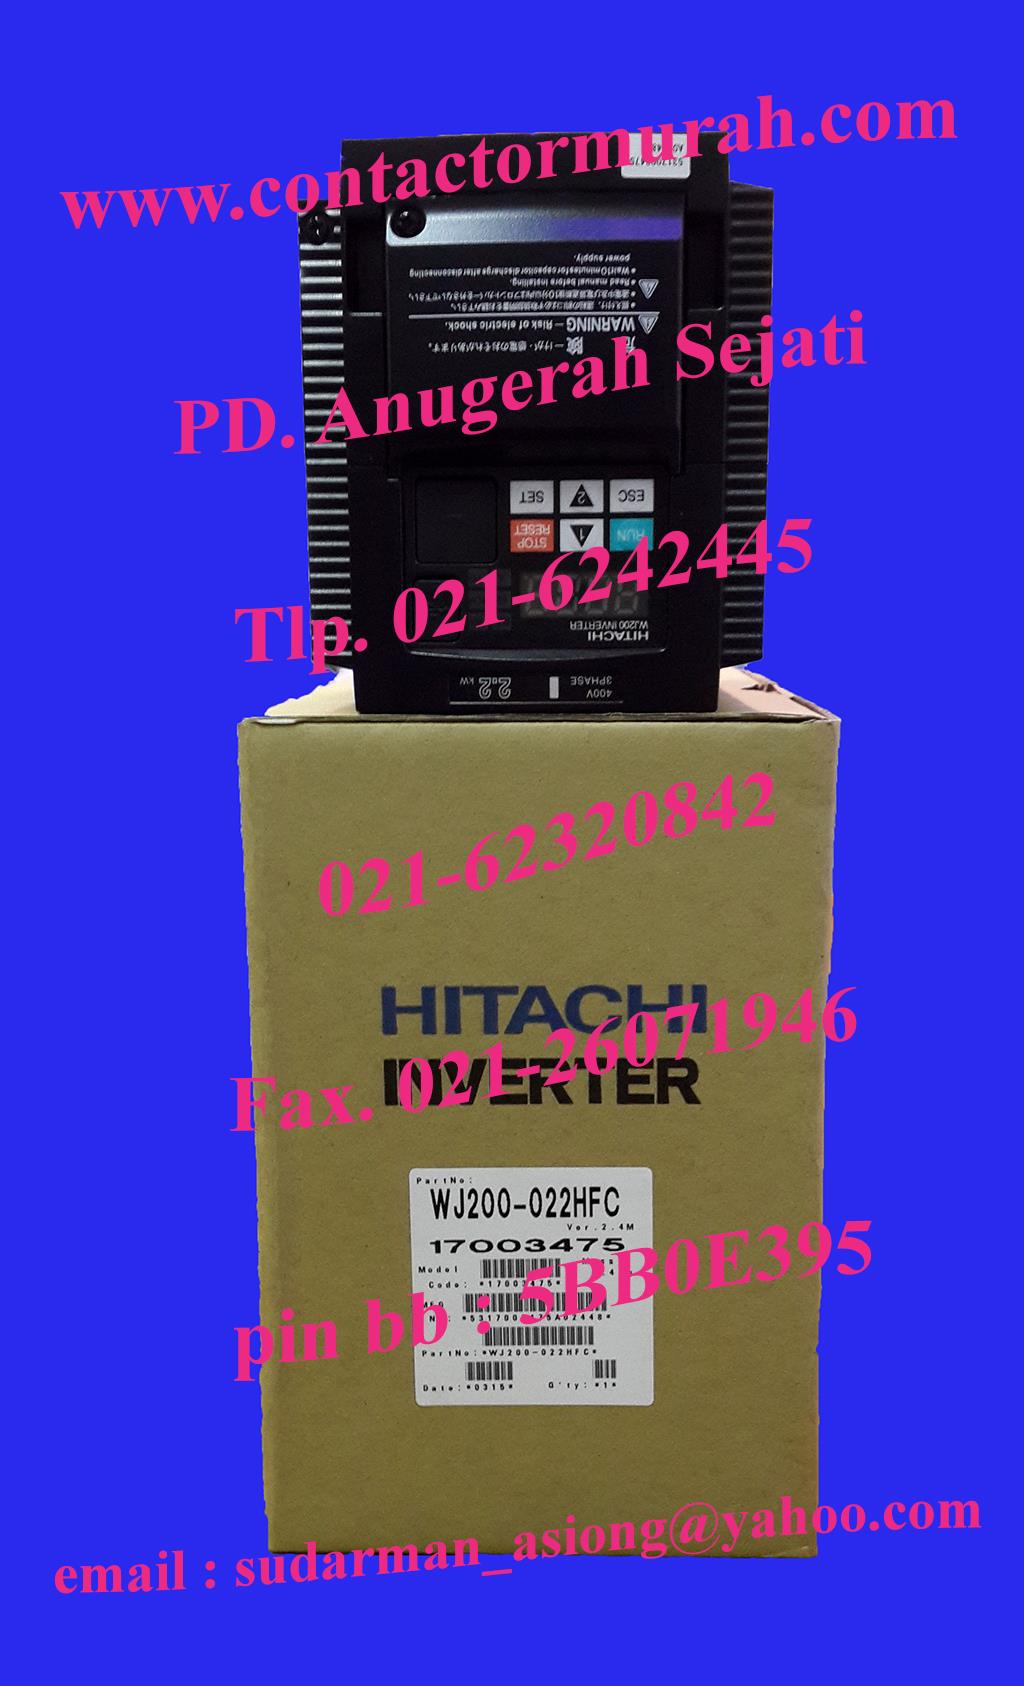 Jual Hitachi WJ200-022HFC inverter Harga Murah Jakarta 